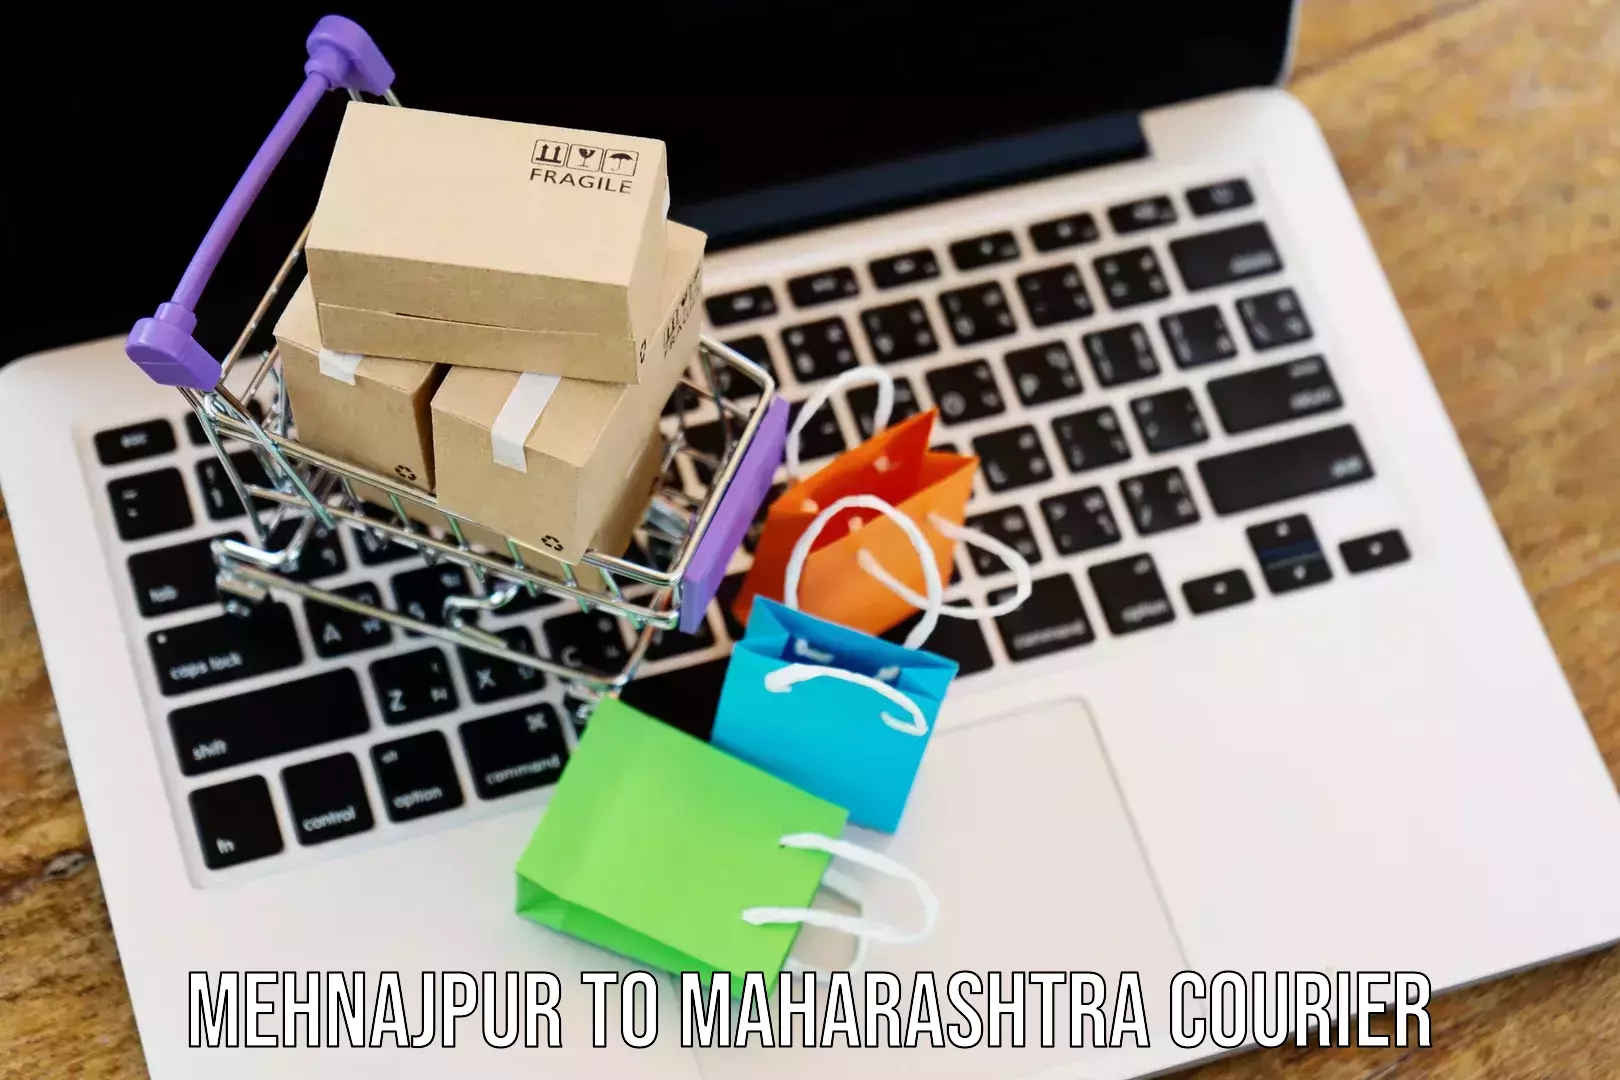 Digital courier platforms Mehnajpur to Kudus